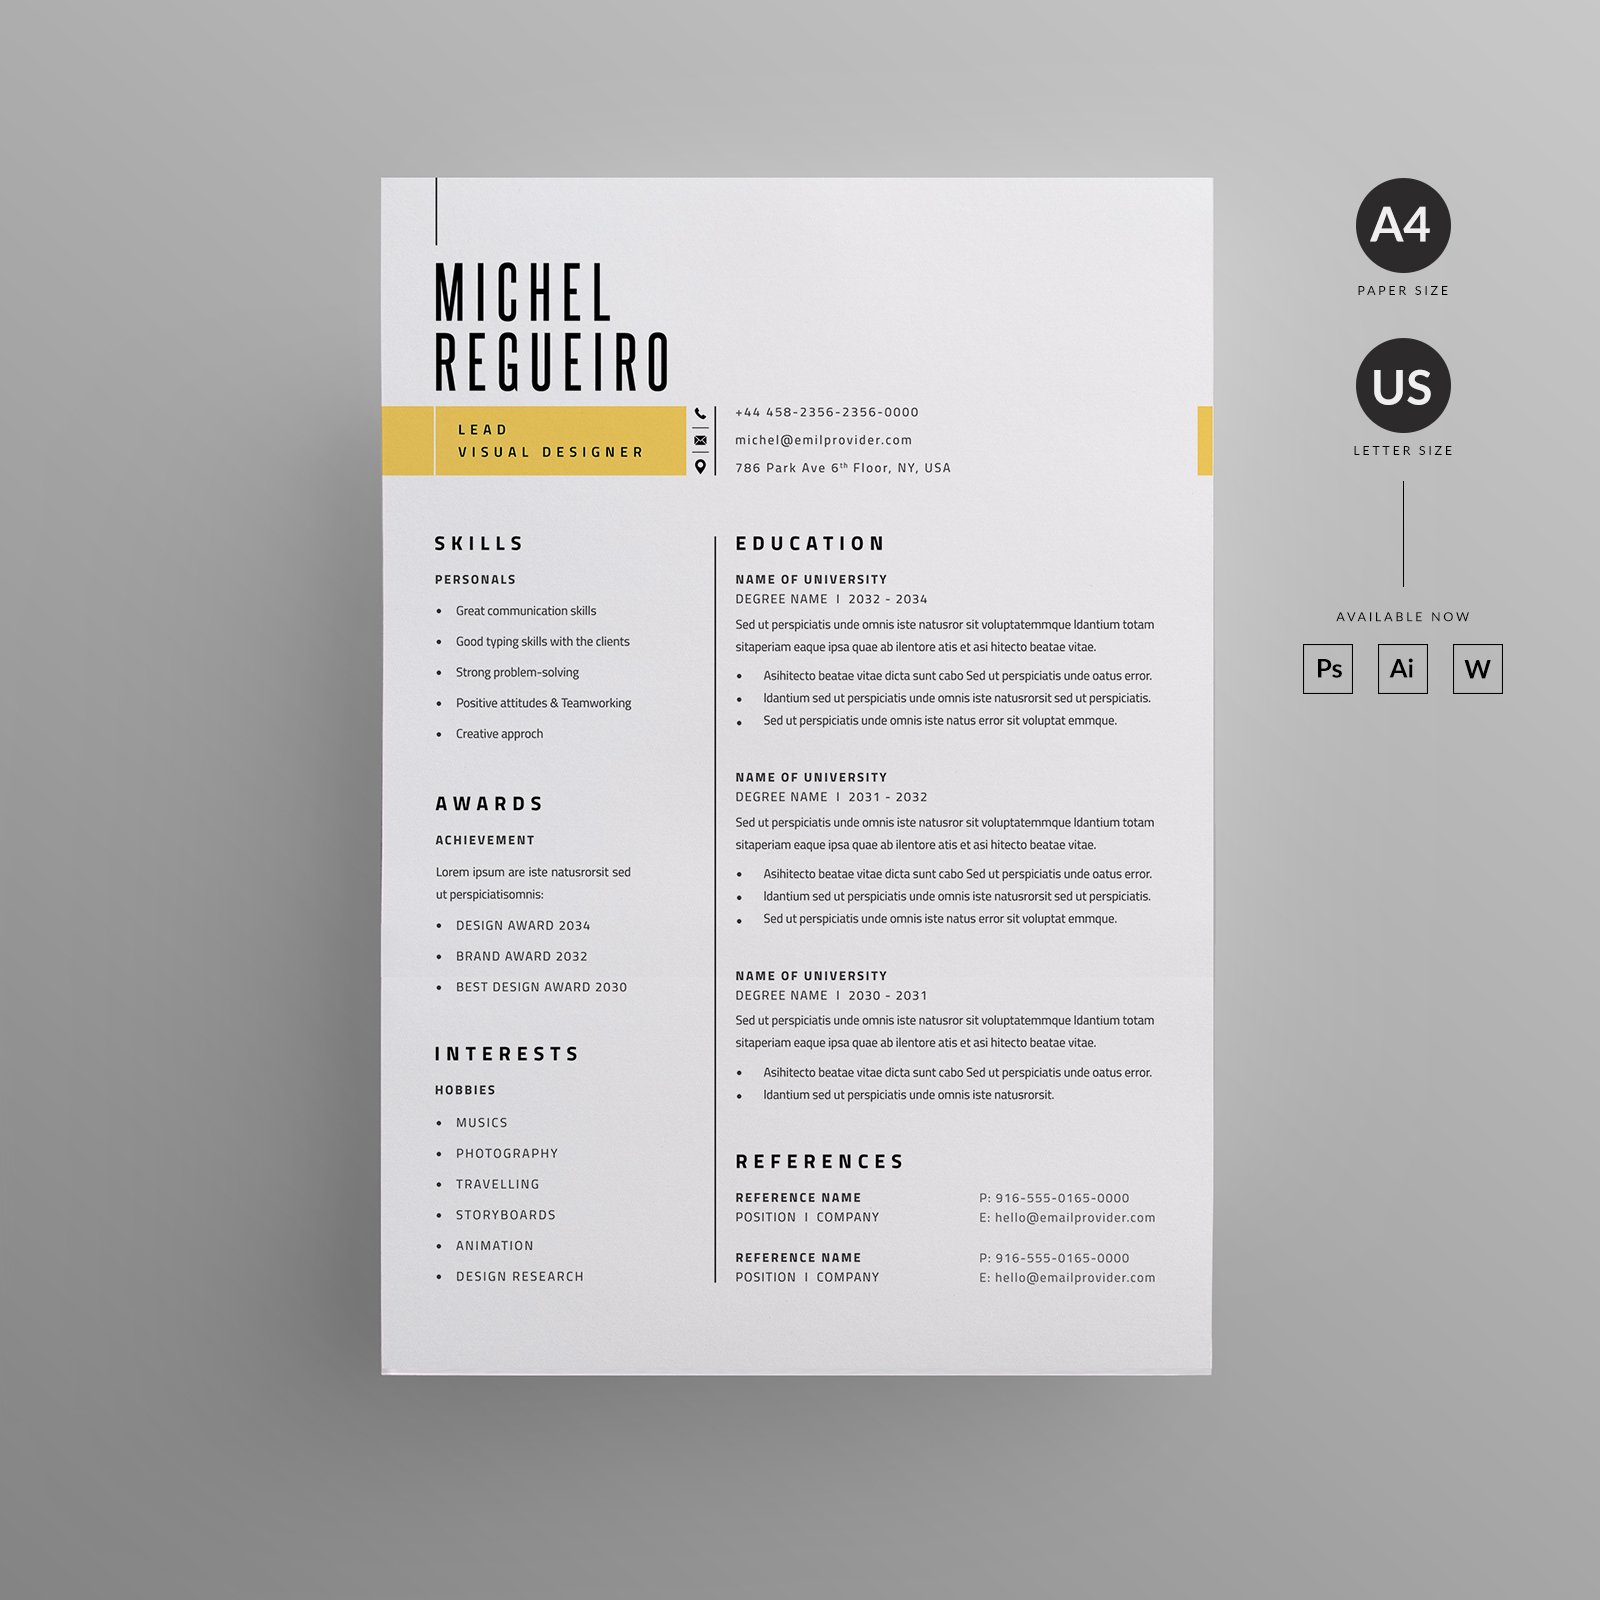 Resume/CV preview image.